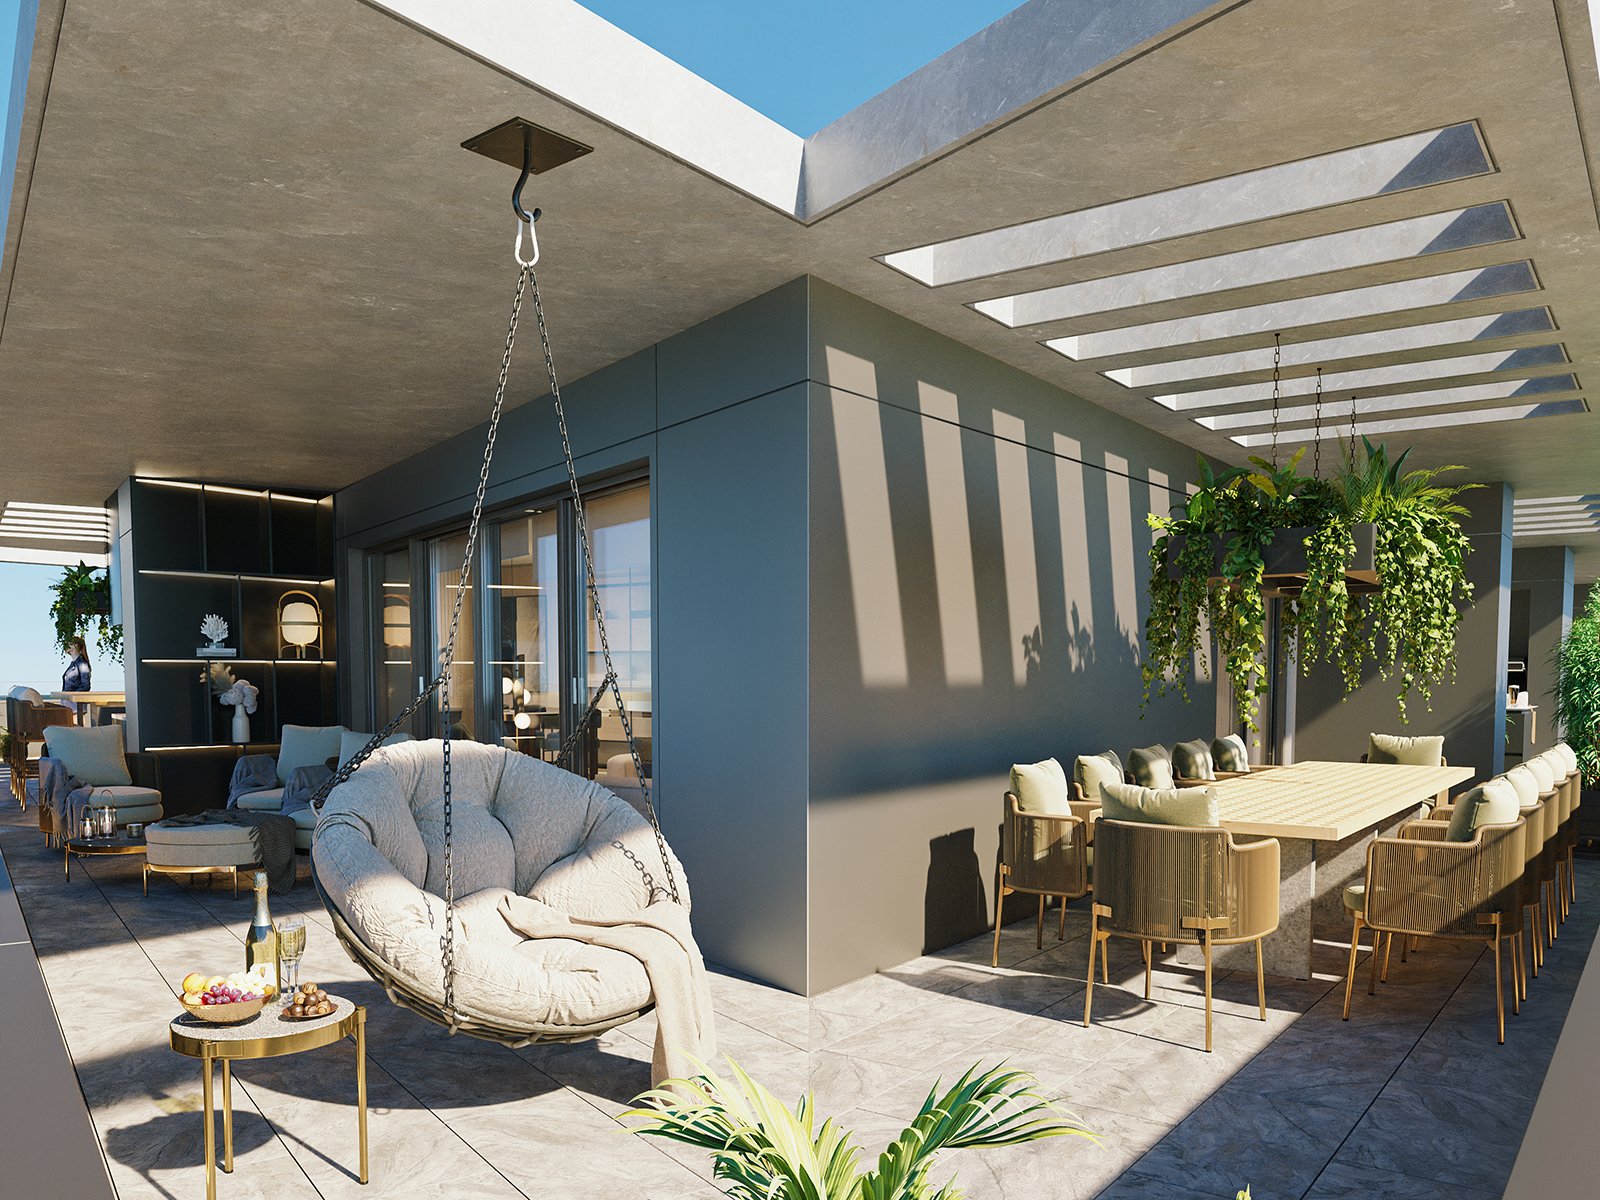 4 bedroom duplex apartment with balcony in new development Matosinhos 2342987366